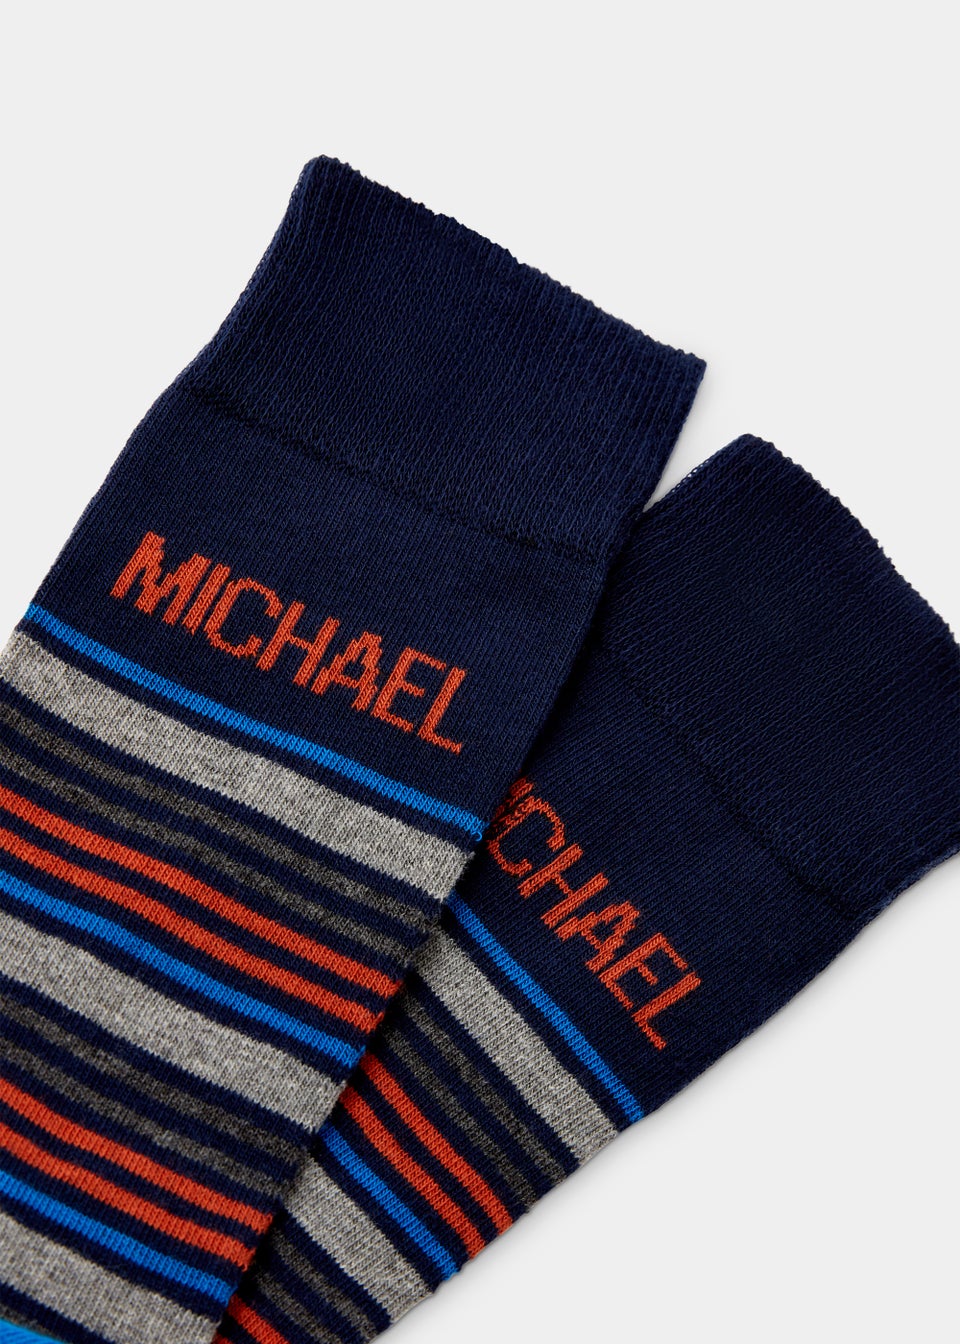 Multicoloured Michael Name Socks